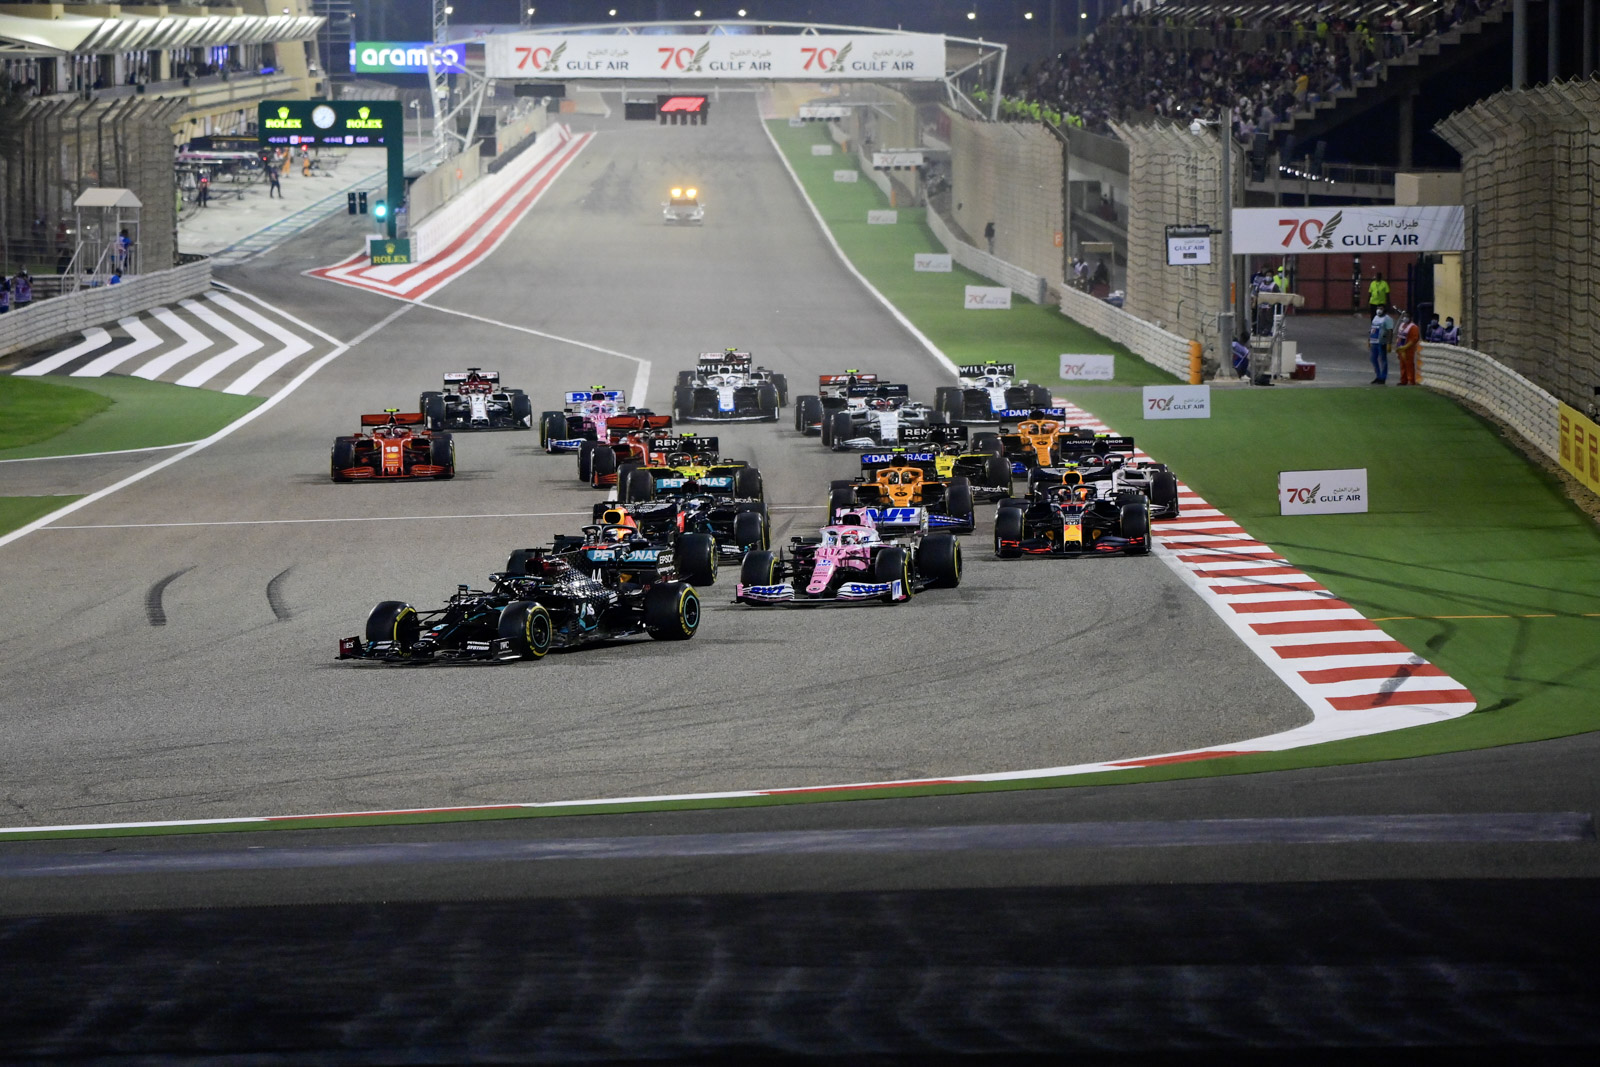 Bahrain Grand Prix 2021